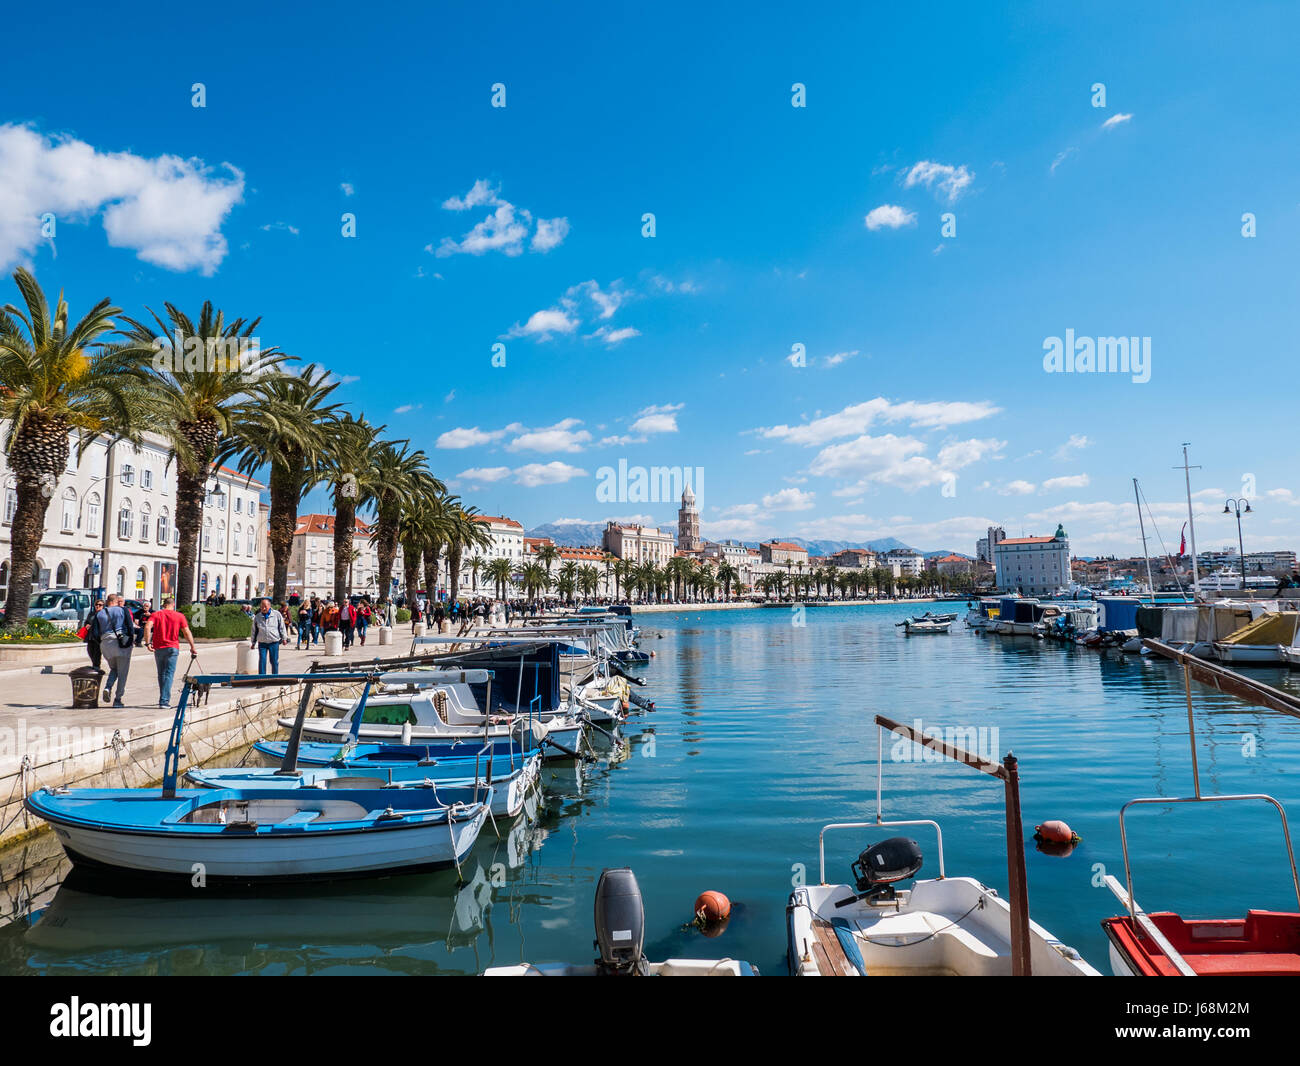 Split, Croatia - 27 March 2016 - Split, Croatia, on a sunny day with blue sky above. Stock Photo